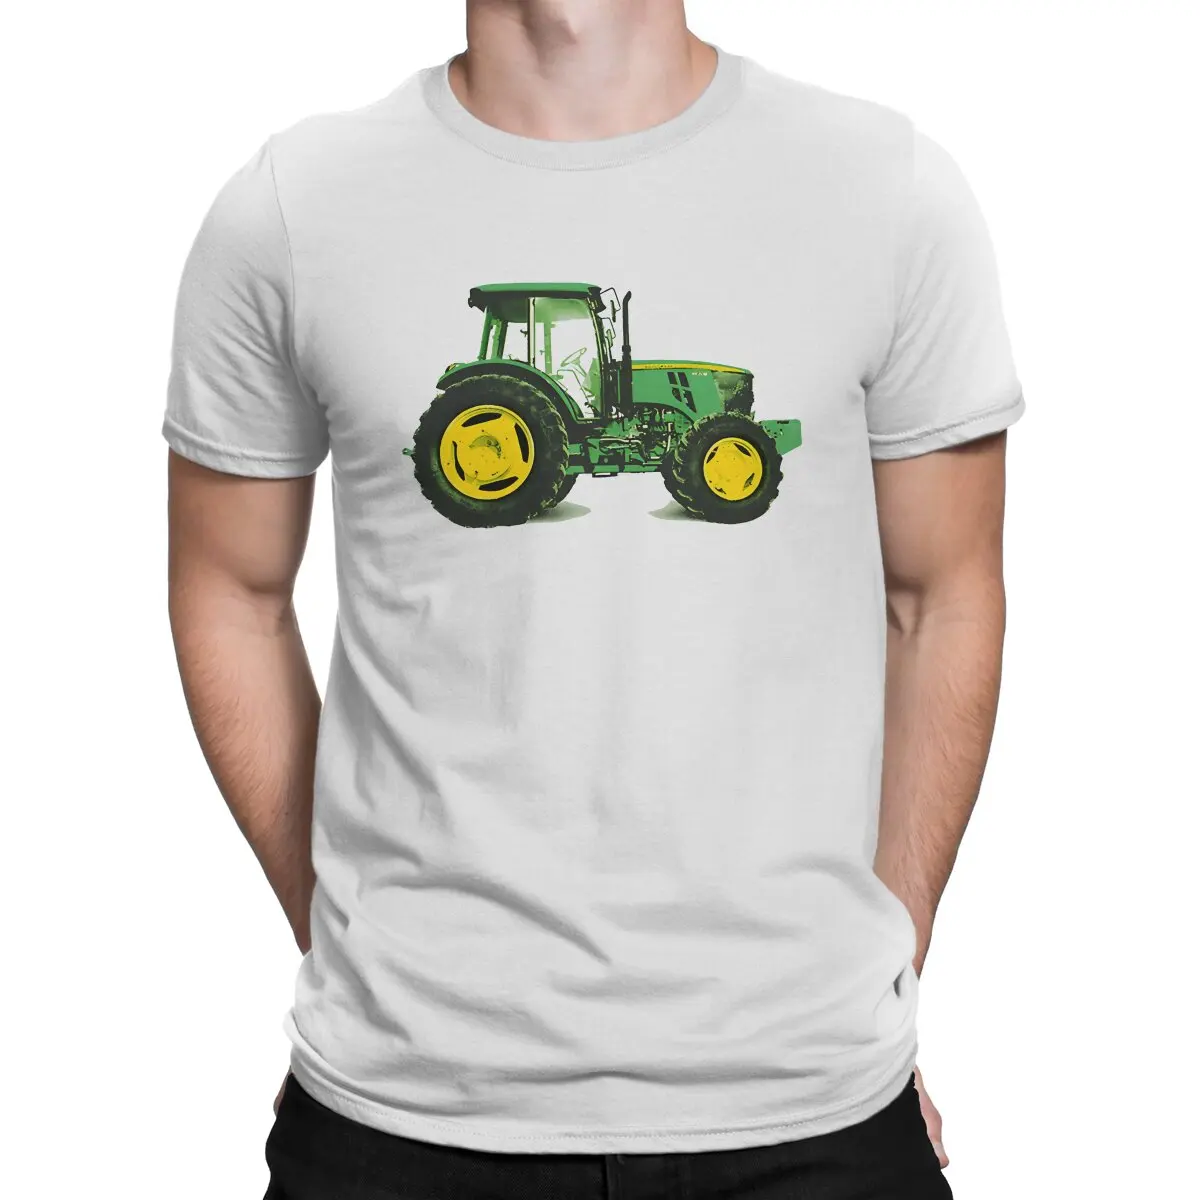 

Novelty Tractor T-Shirts for Men Crewneck Cotton T Shirts J-Johns Dee Short Sleeve Tee Shirt Gift Idea Clothes